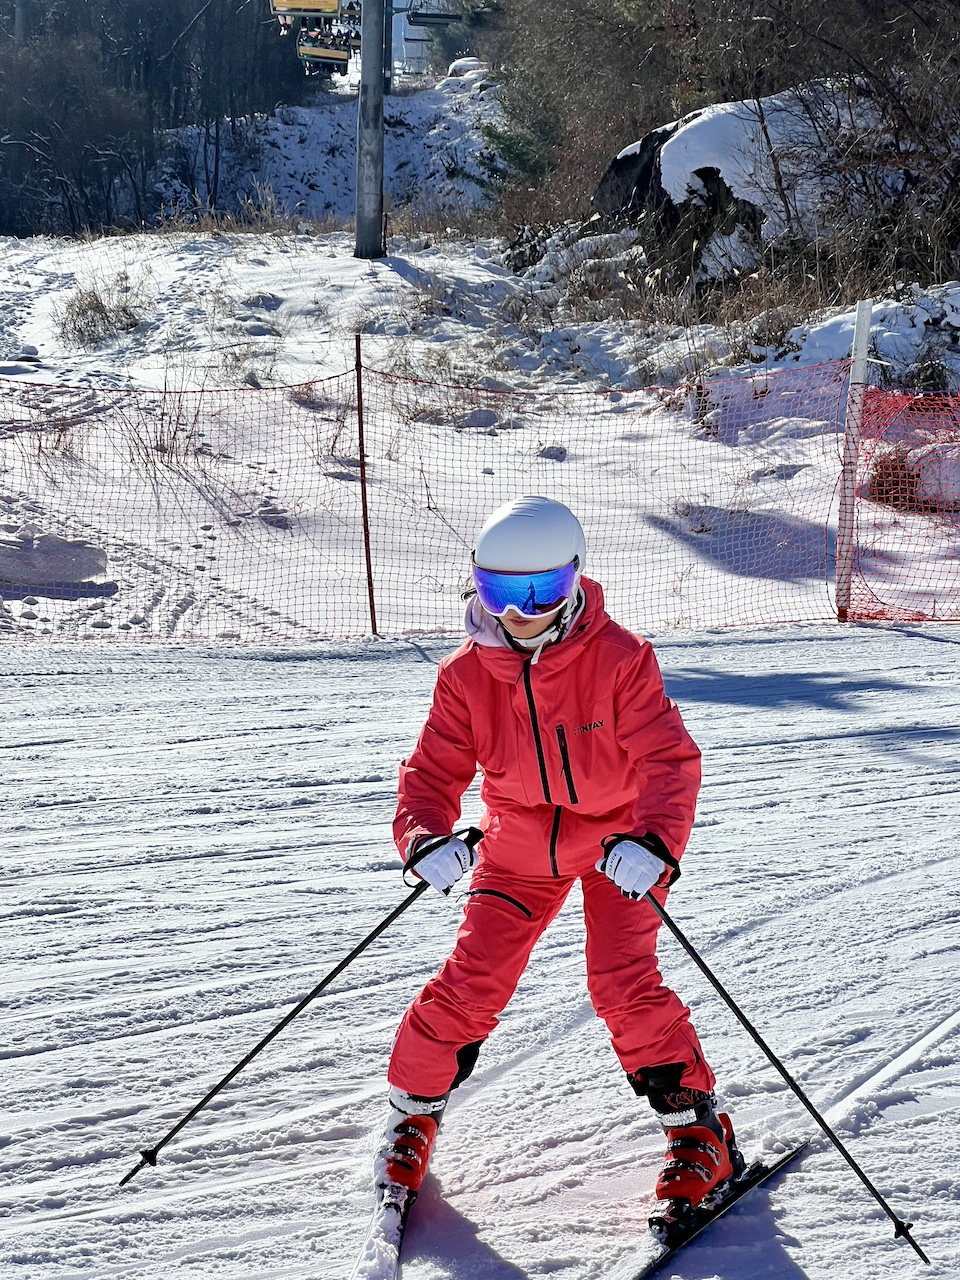 Beginner Lucy, takes to slopes at Muju Deogyusan Resort